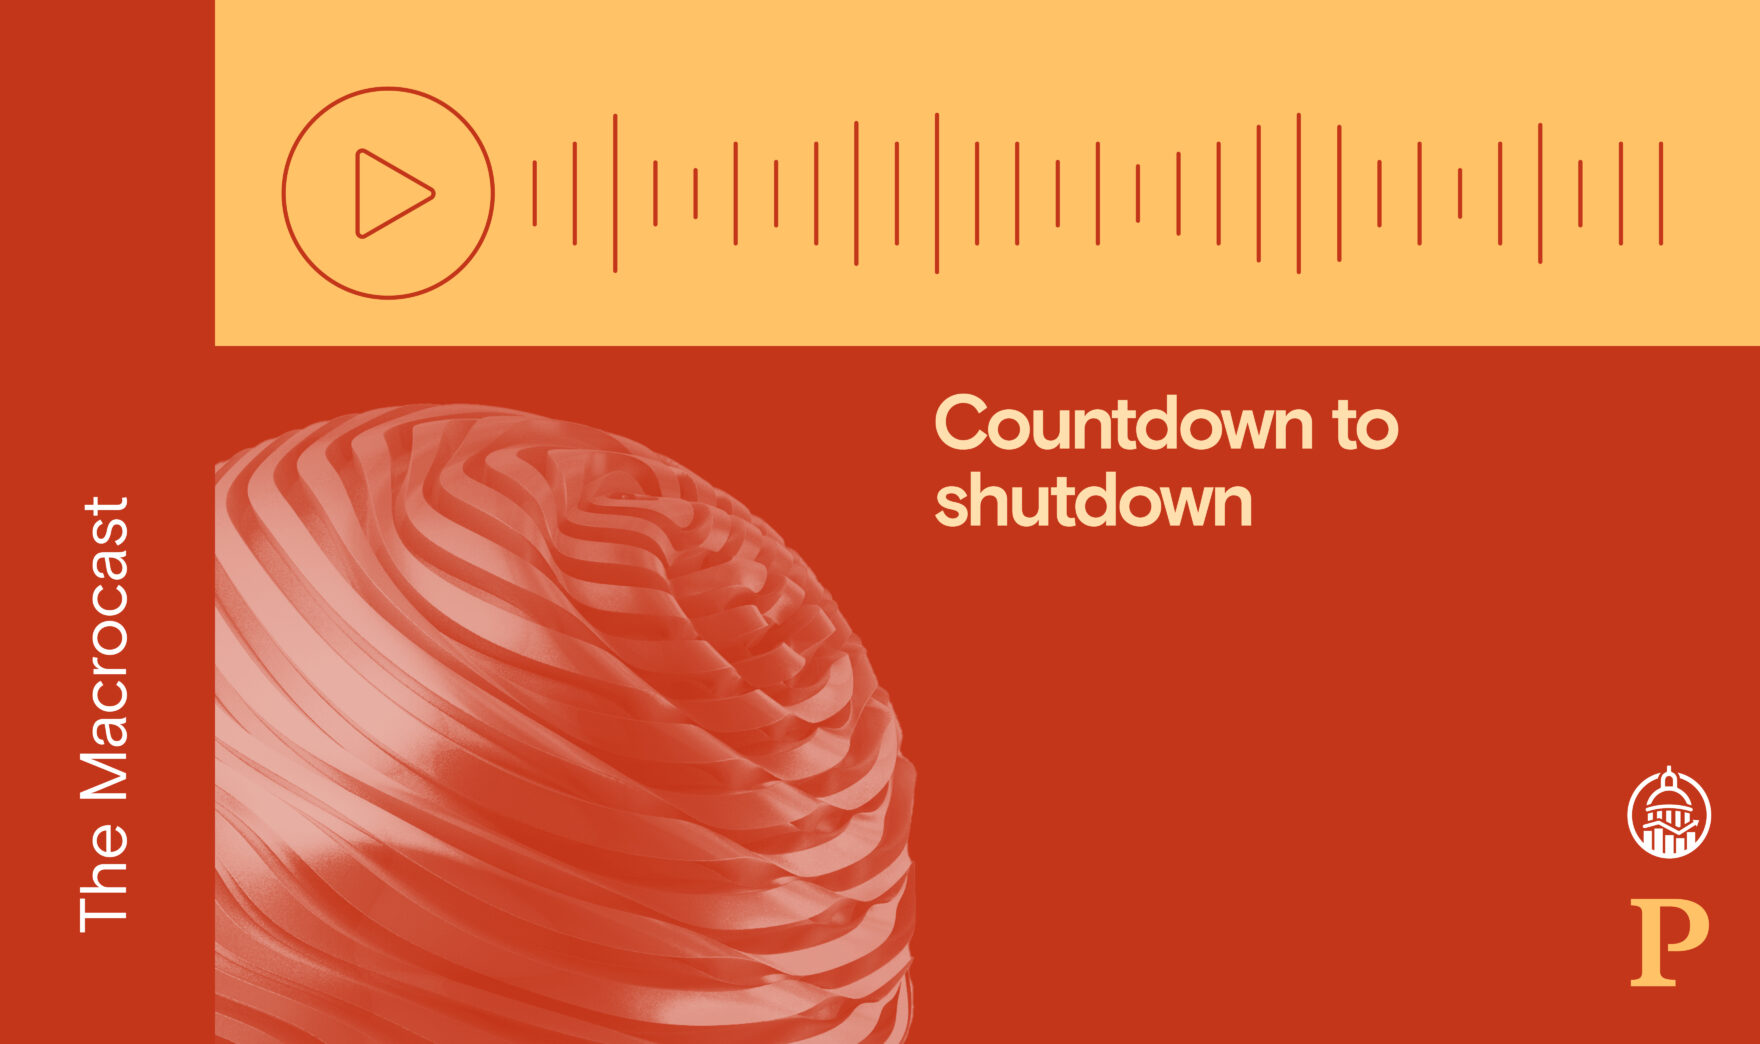 Macrocast: Countdown to shutdown